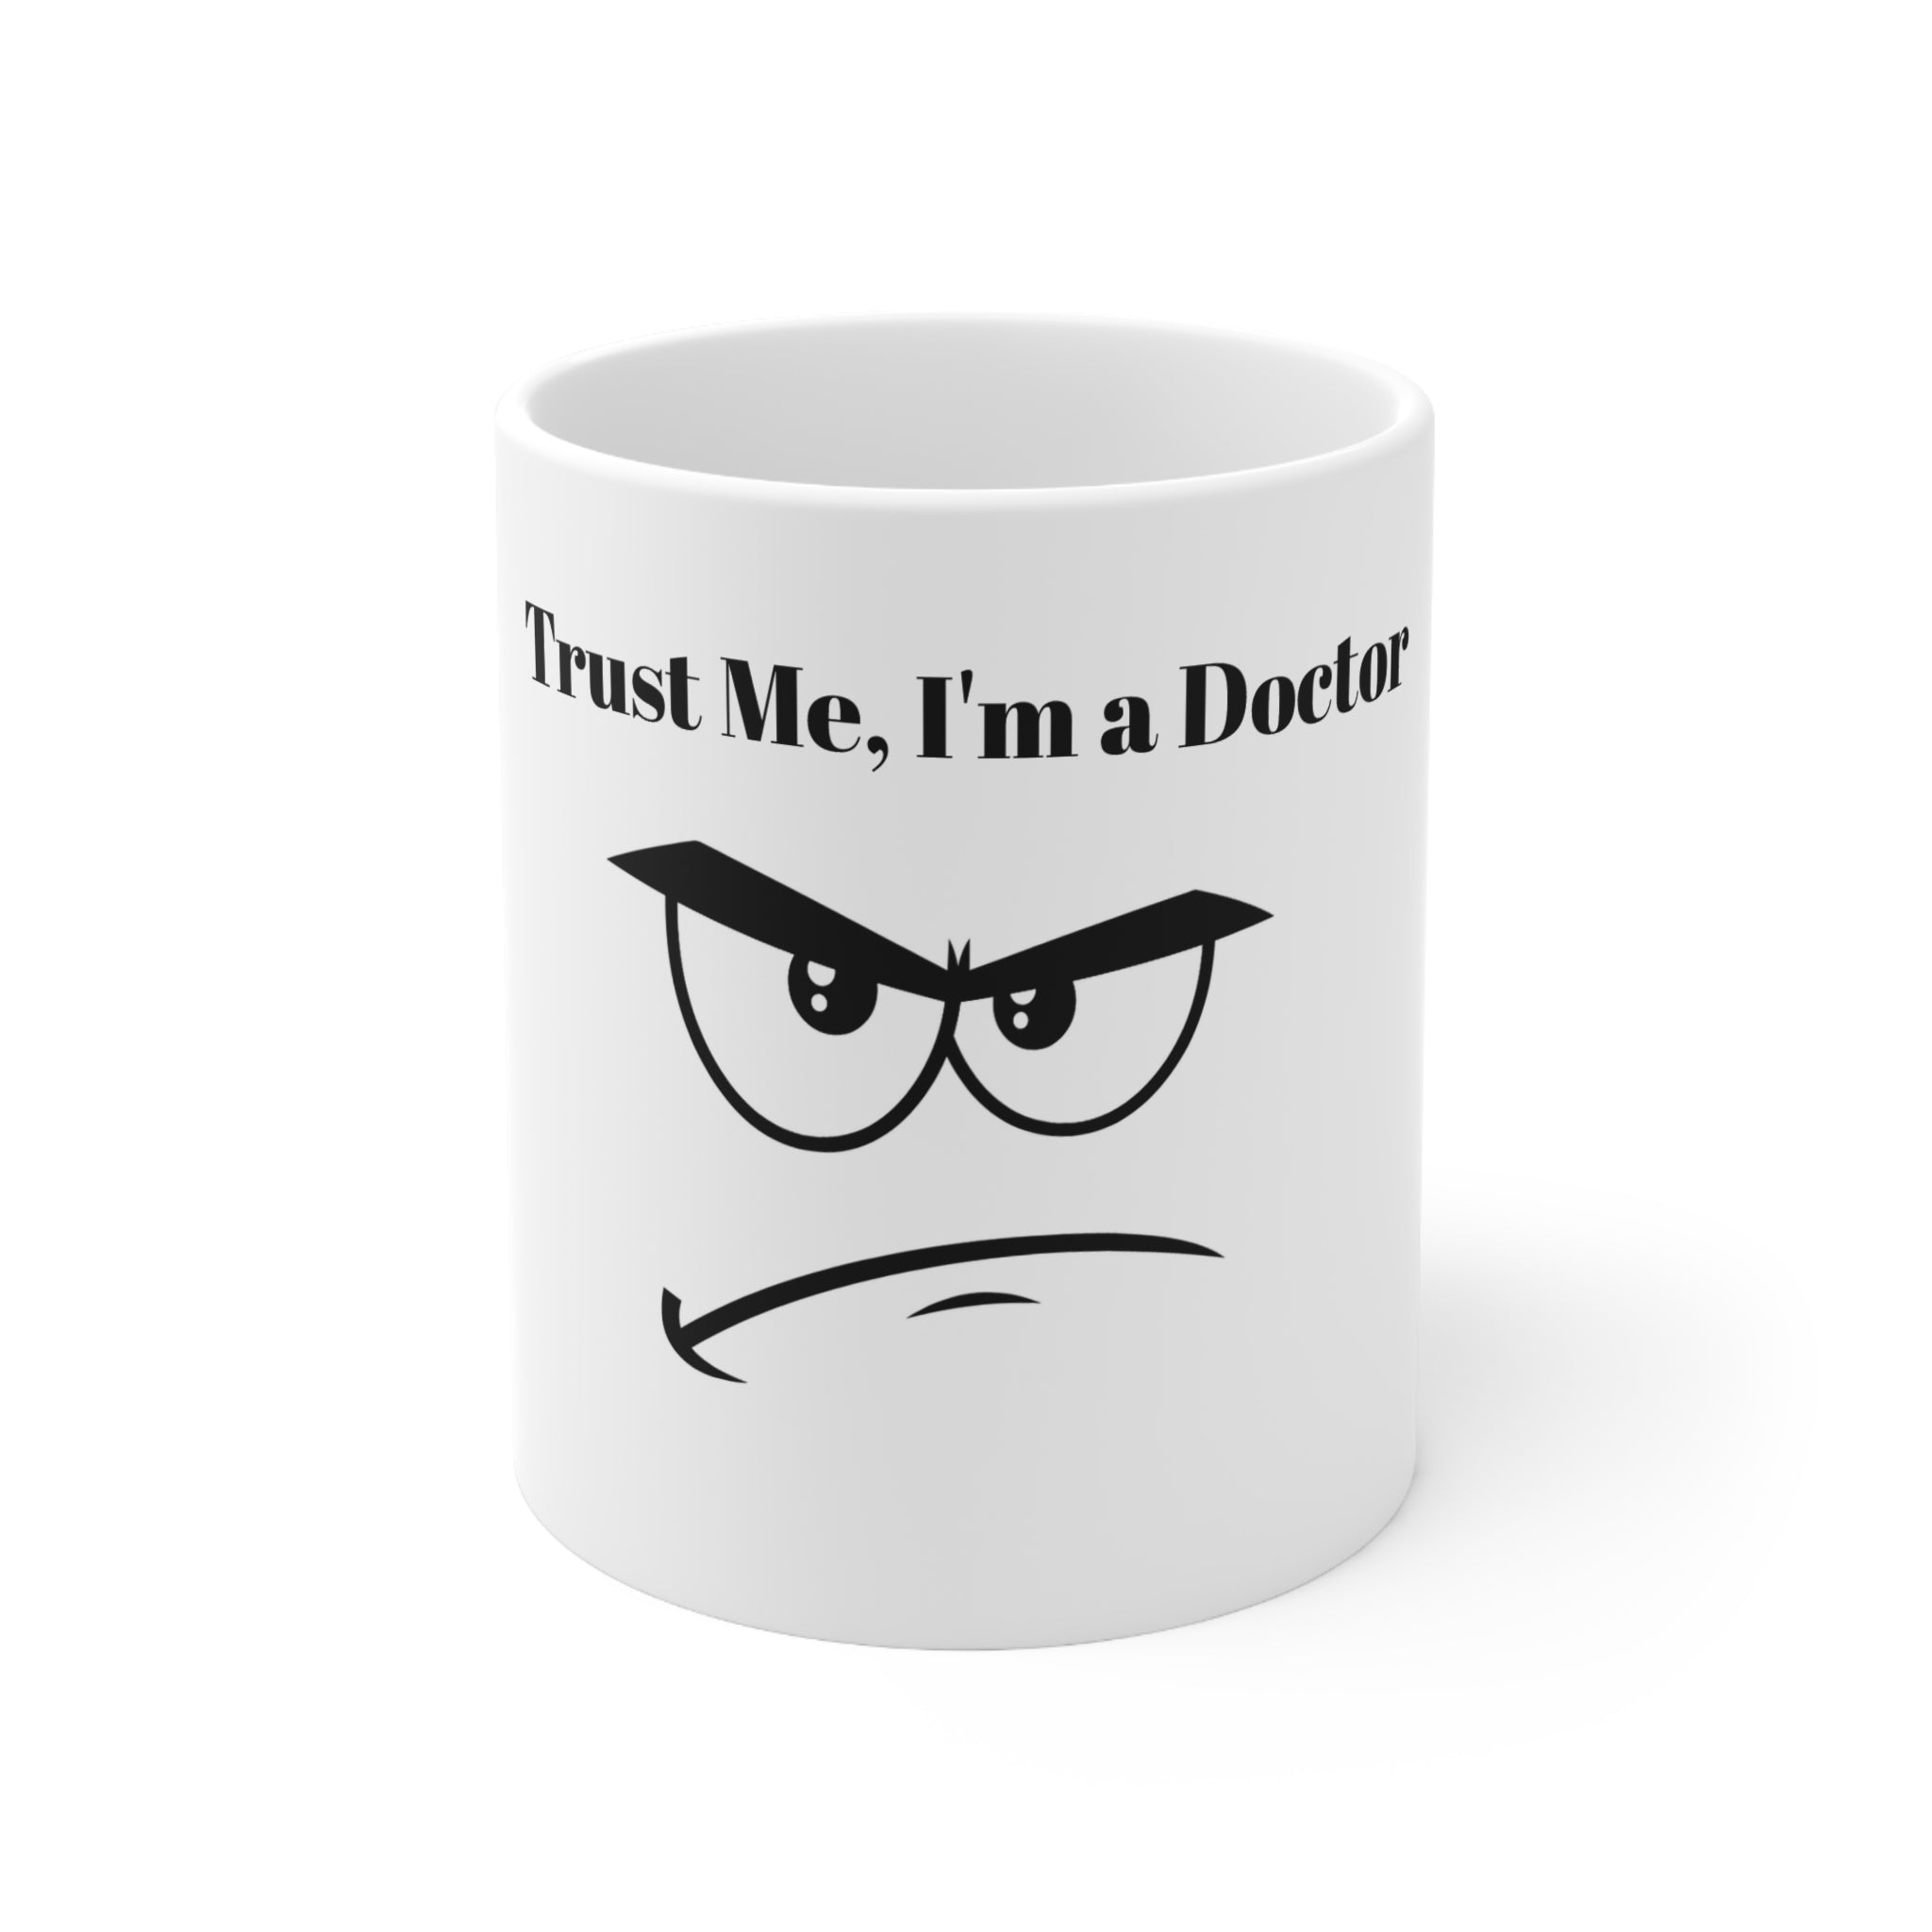 Trust Me I'm a Doctor", "Ceramic Mug", "11oz", "Unique Office", and "Leader Gift